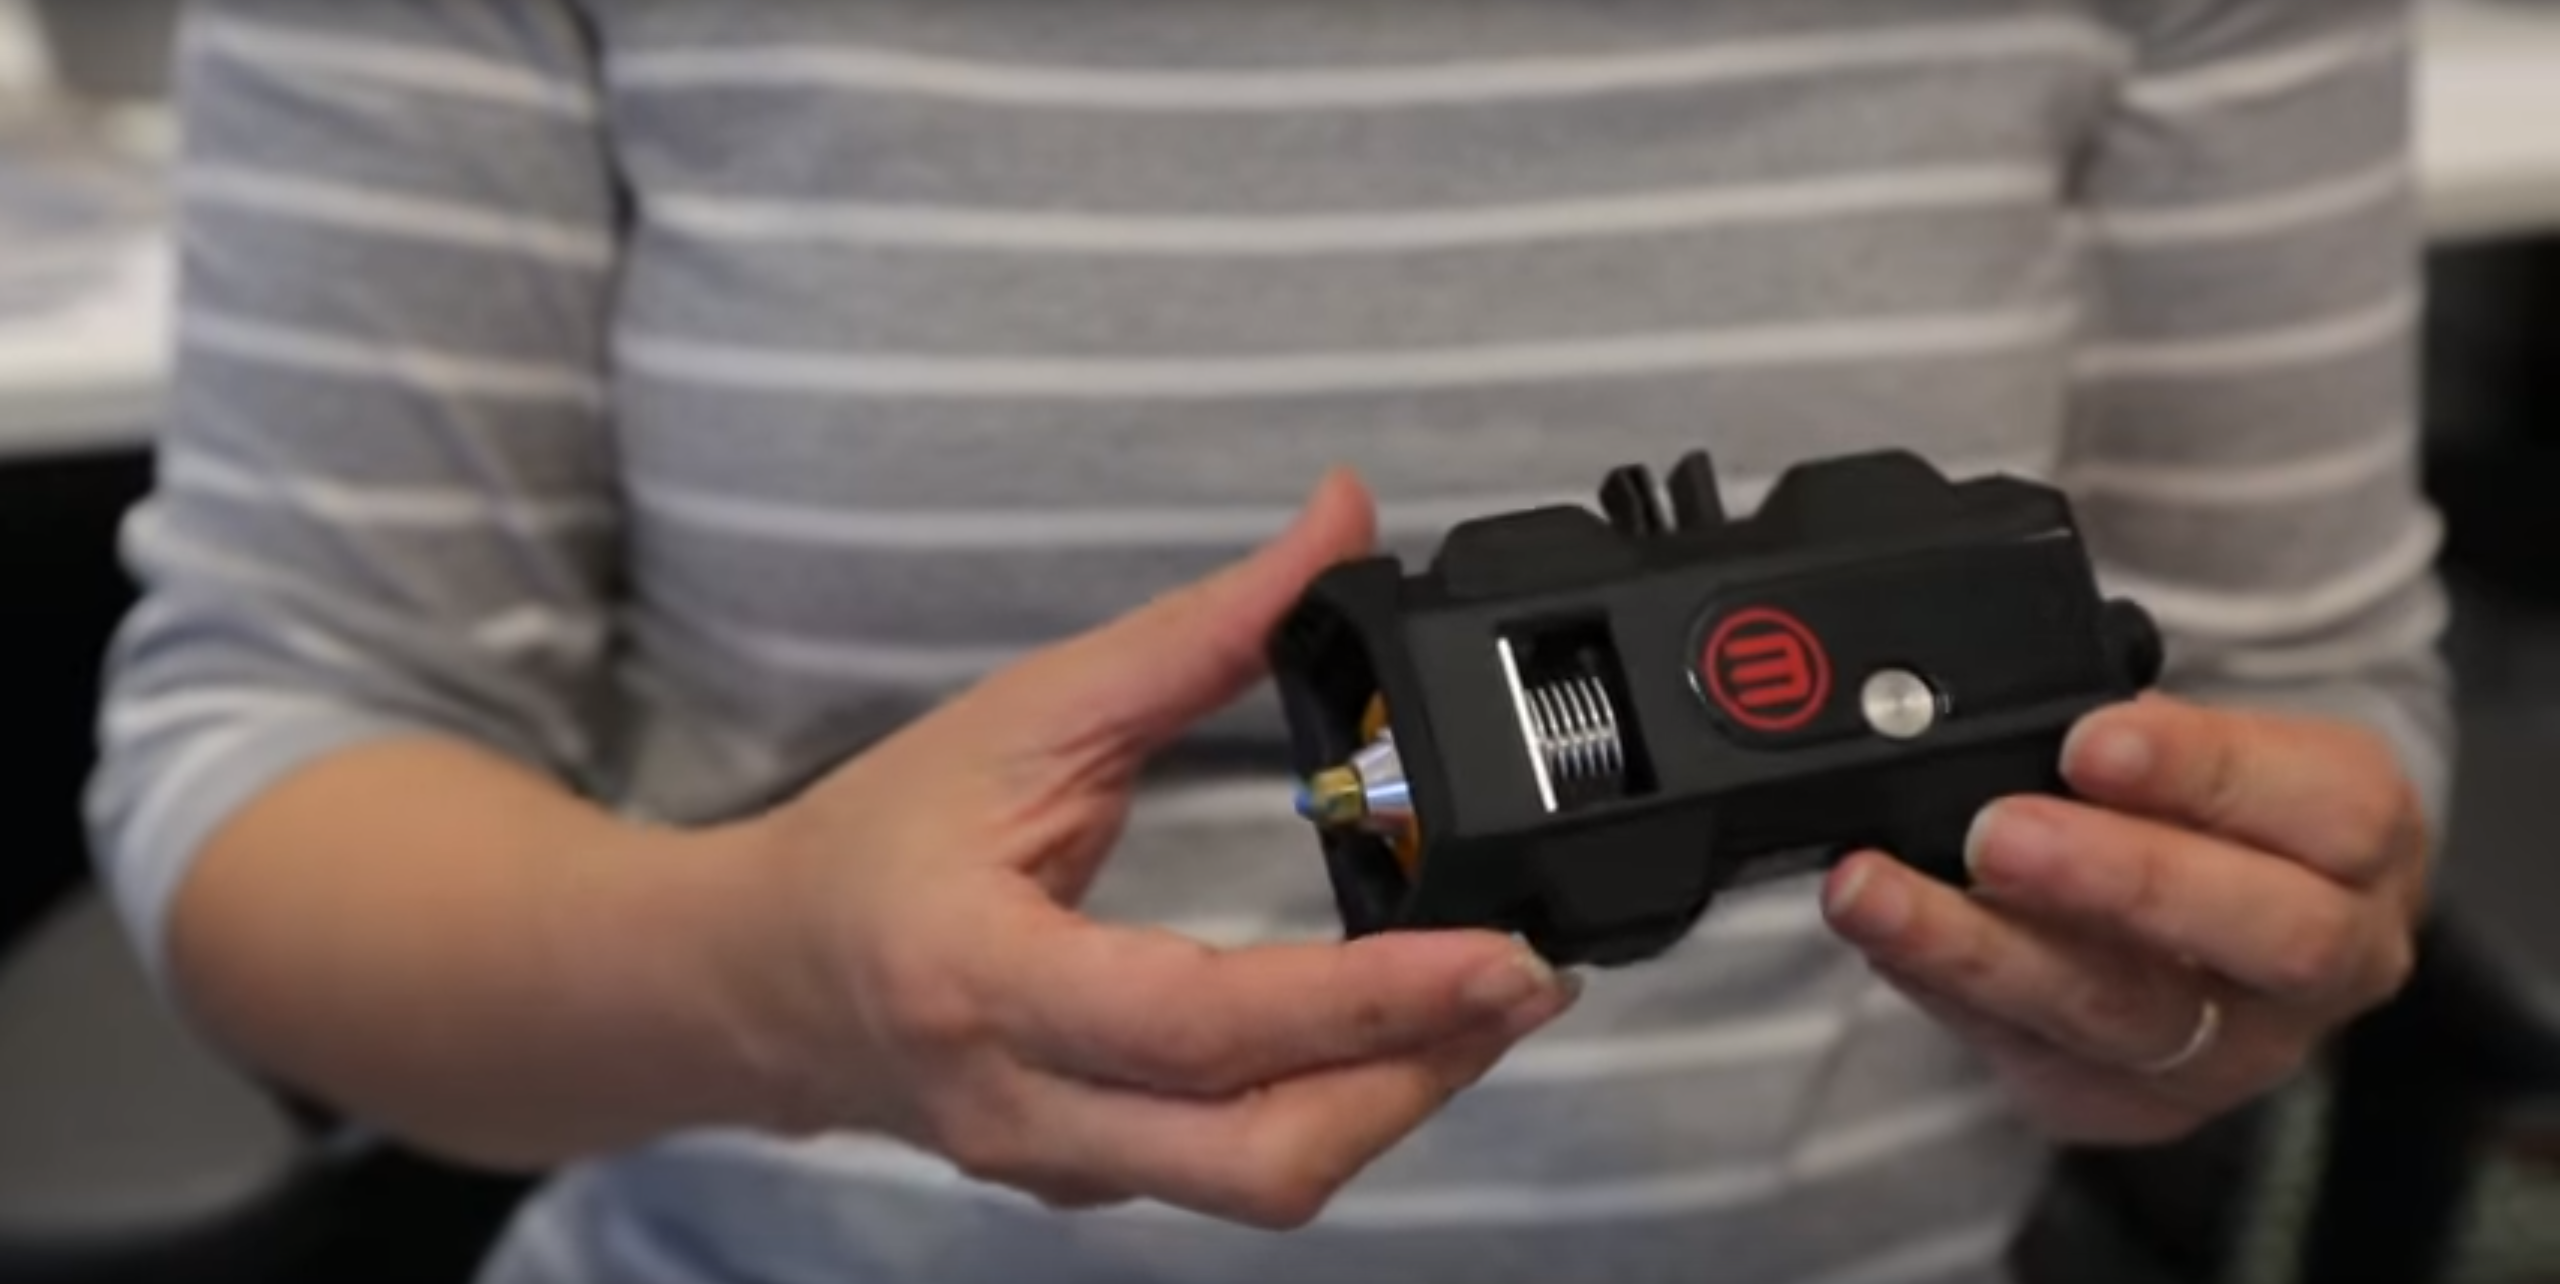 MakerBot 做了一款更可靠的喷头